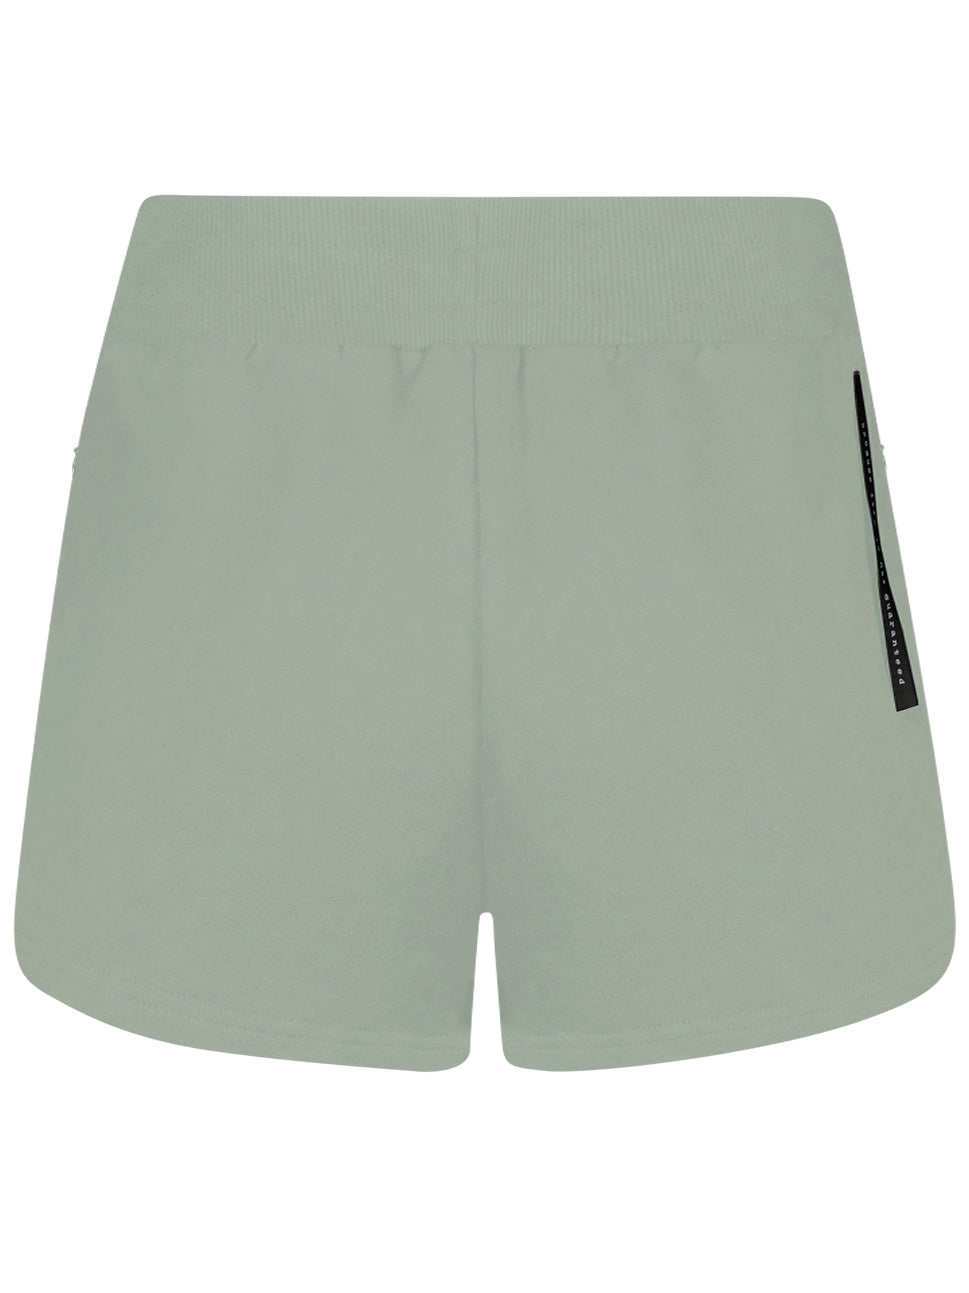 Bling Knit Shorts Seafoam Green BLW08BC KBS01